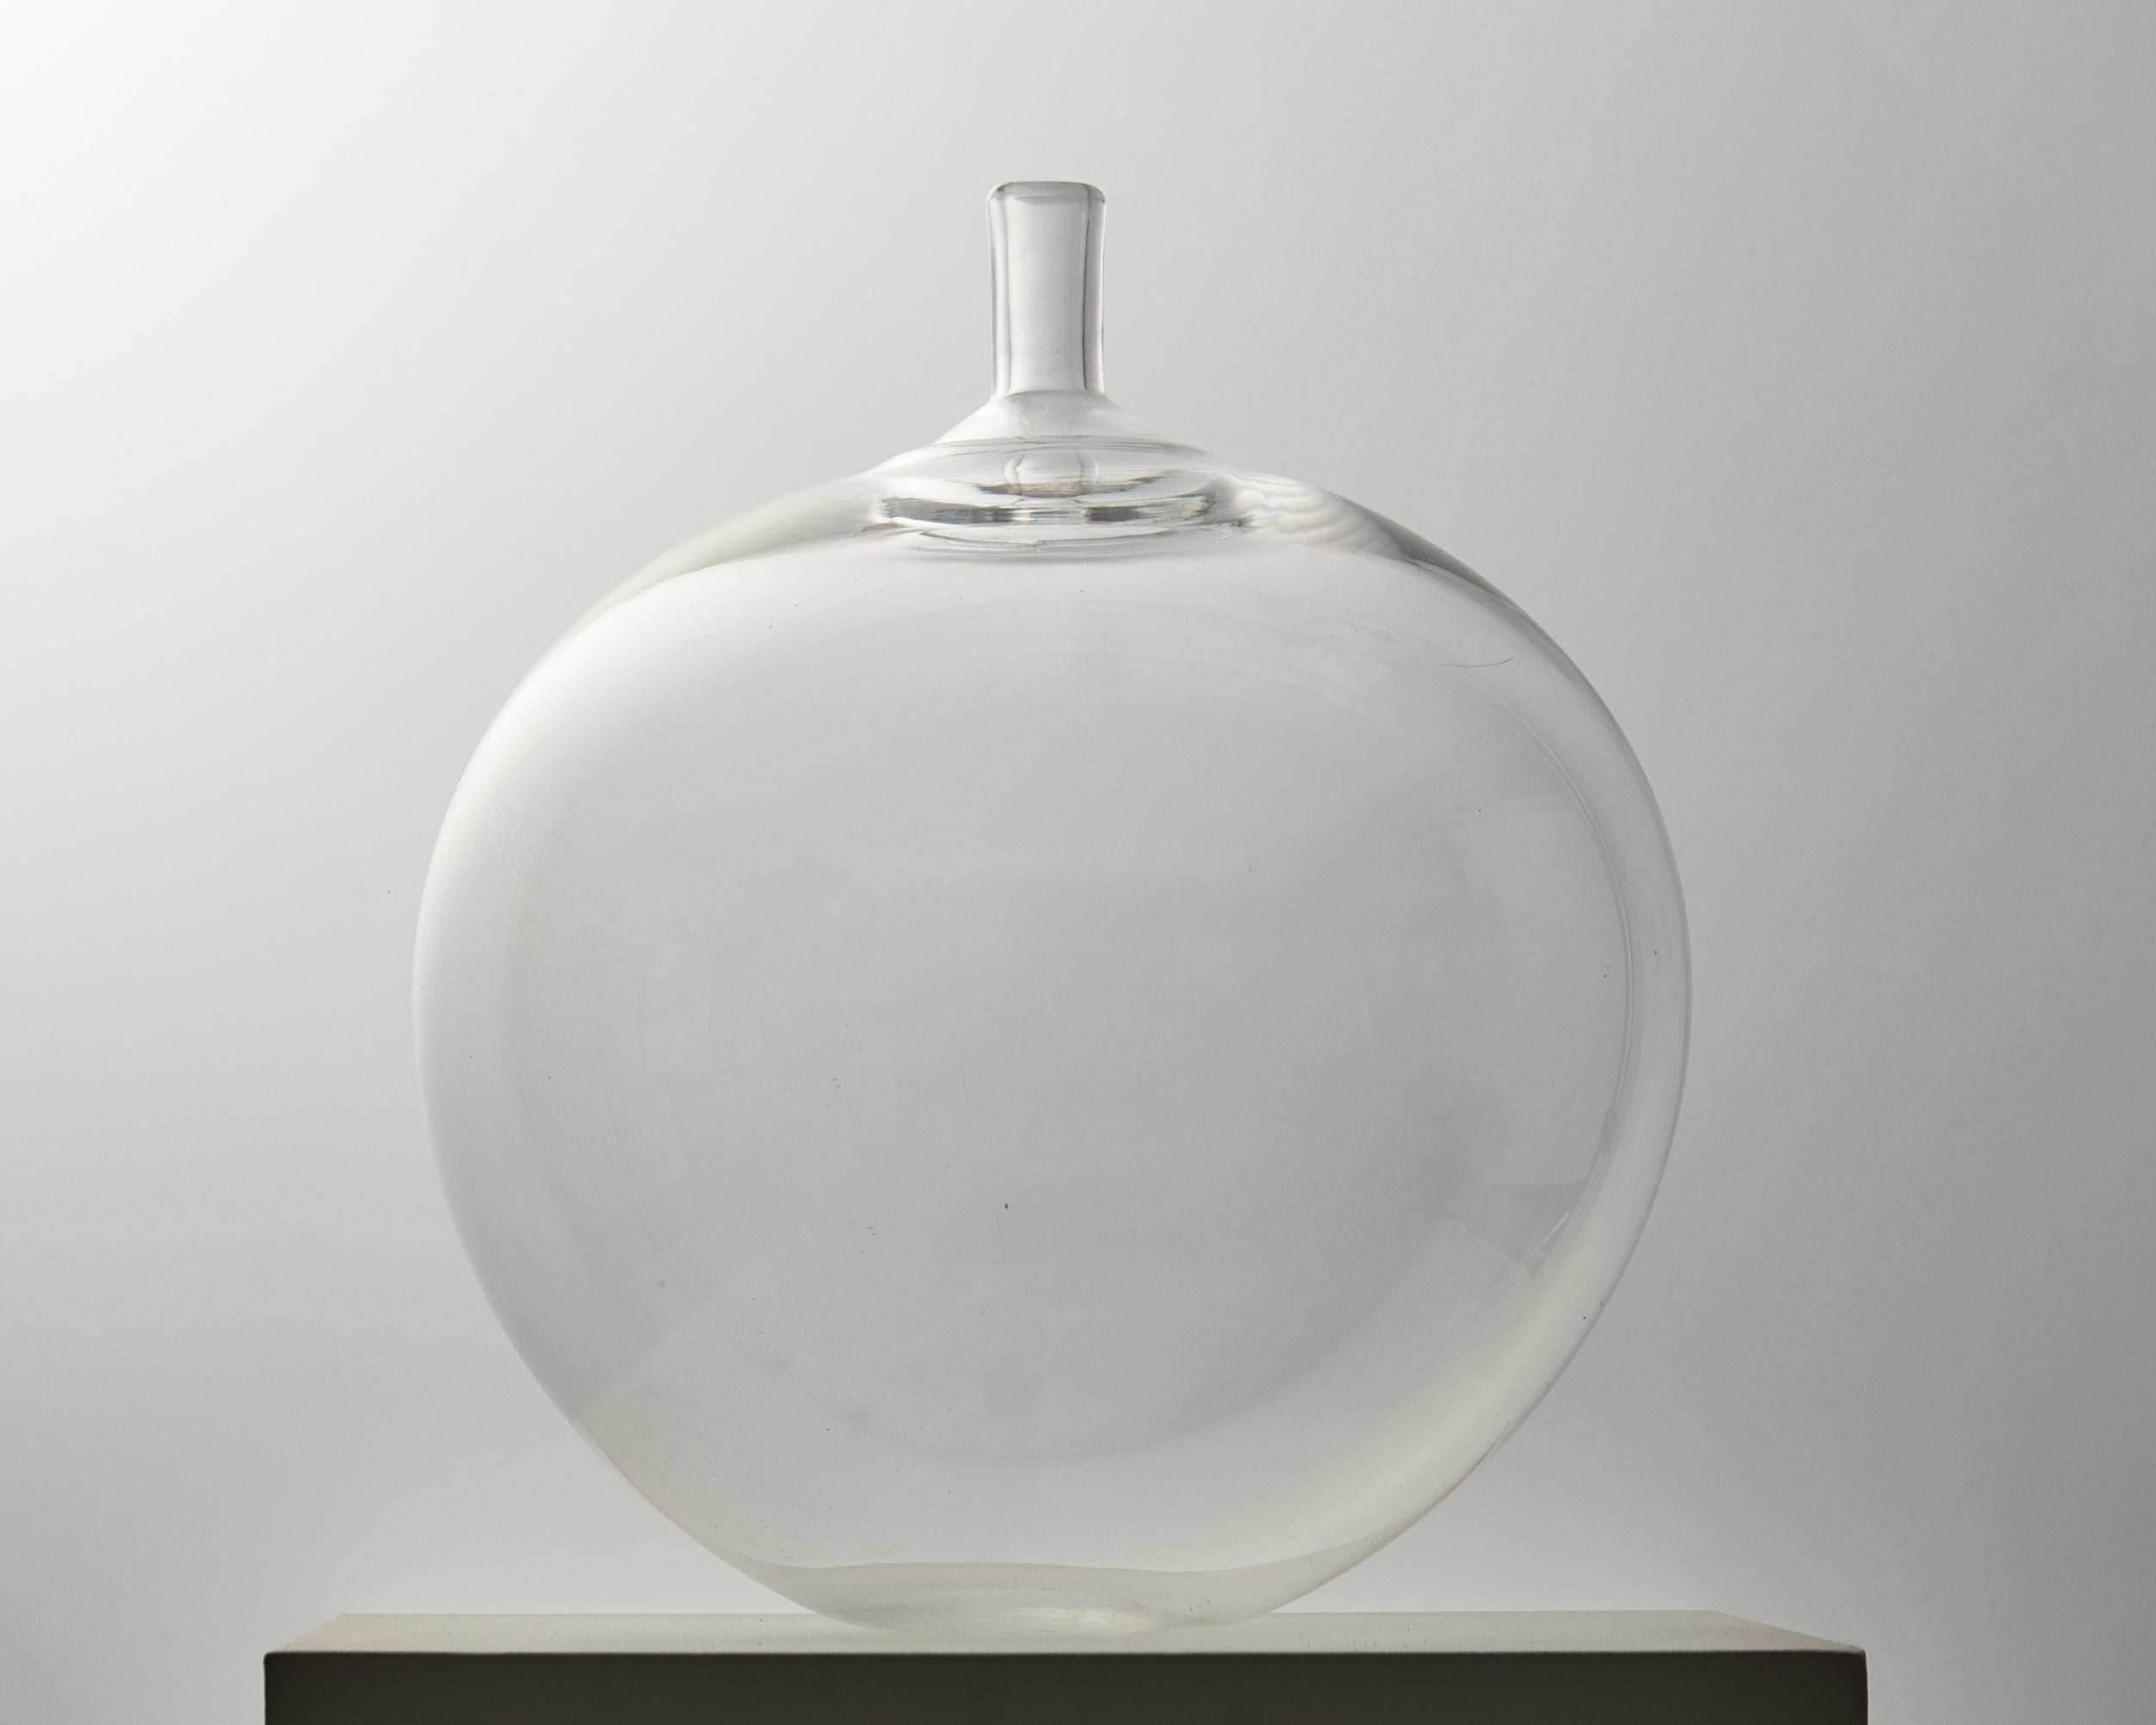 Vase/sculpture ‘The Apple’ designed by Ingeborg Lundin for Orrefors,
Sweden. 1957.

Glass.

Signed.

Measurements: 
Height: 37.5 cm / 14 3/4''
Diameter: 30 cm / 11 3/4''.

Ingeborg Lundin studied at the National College of Art, Craft and Design,